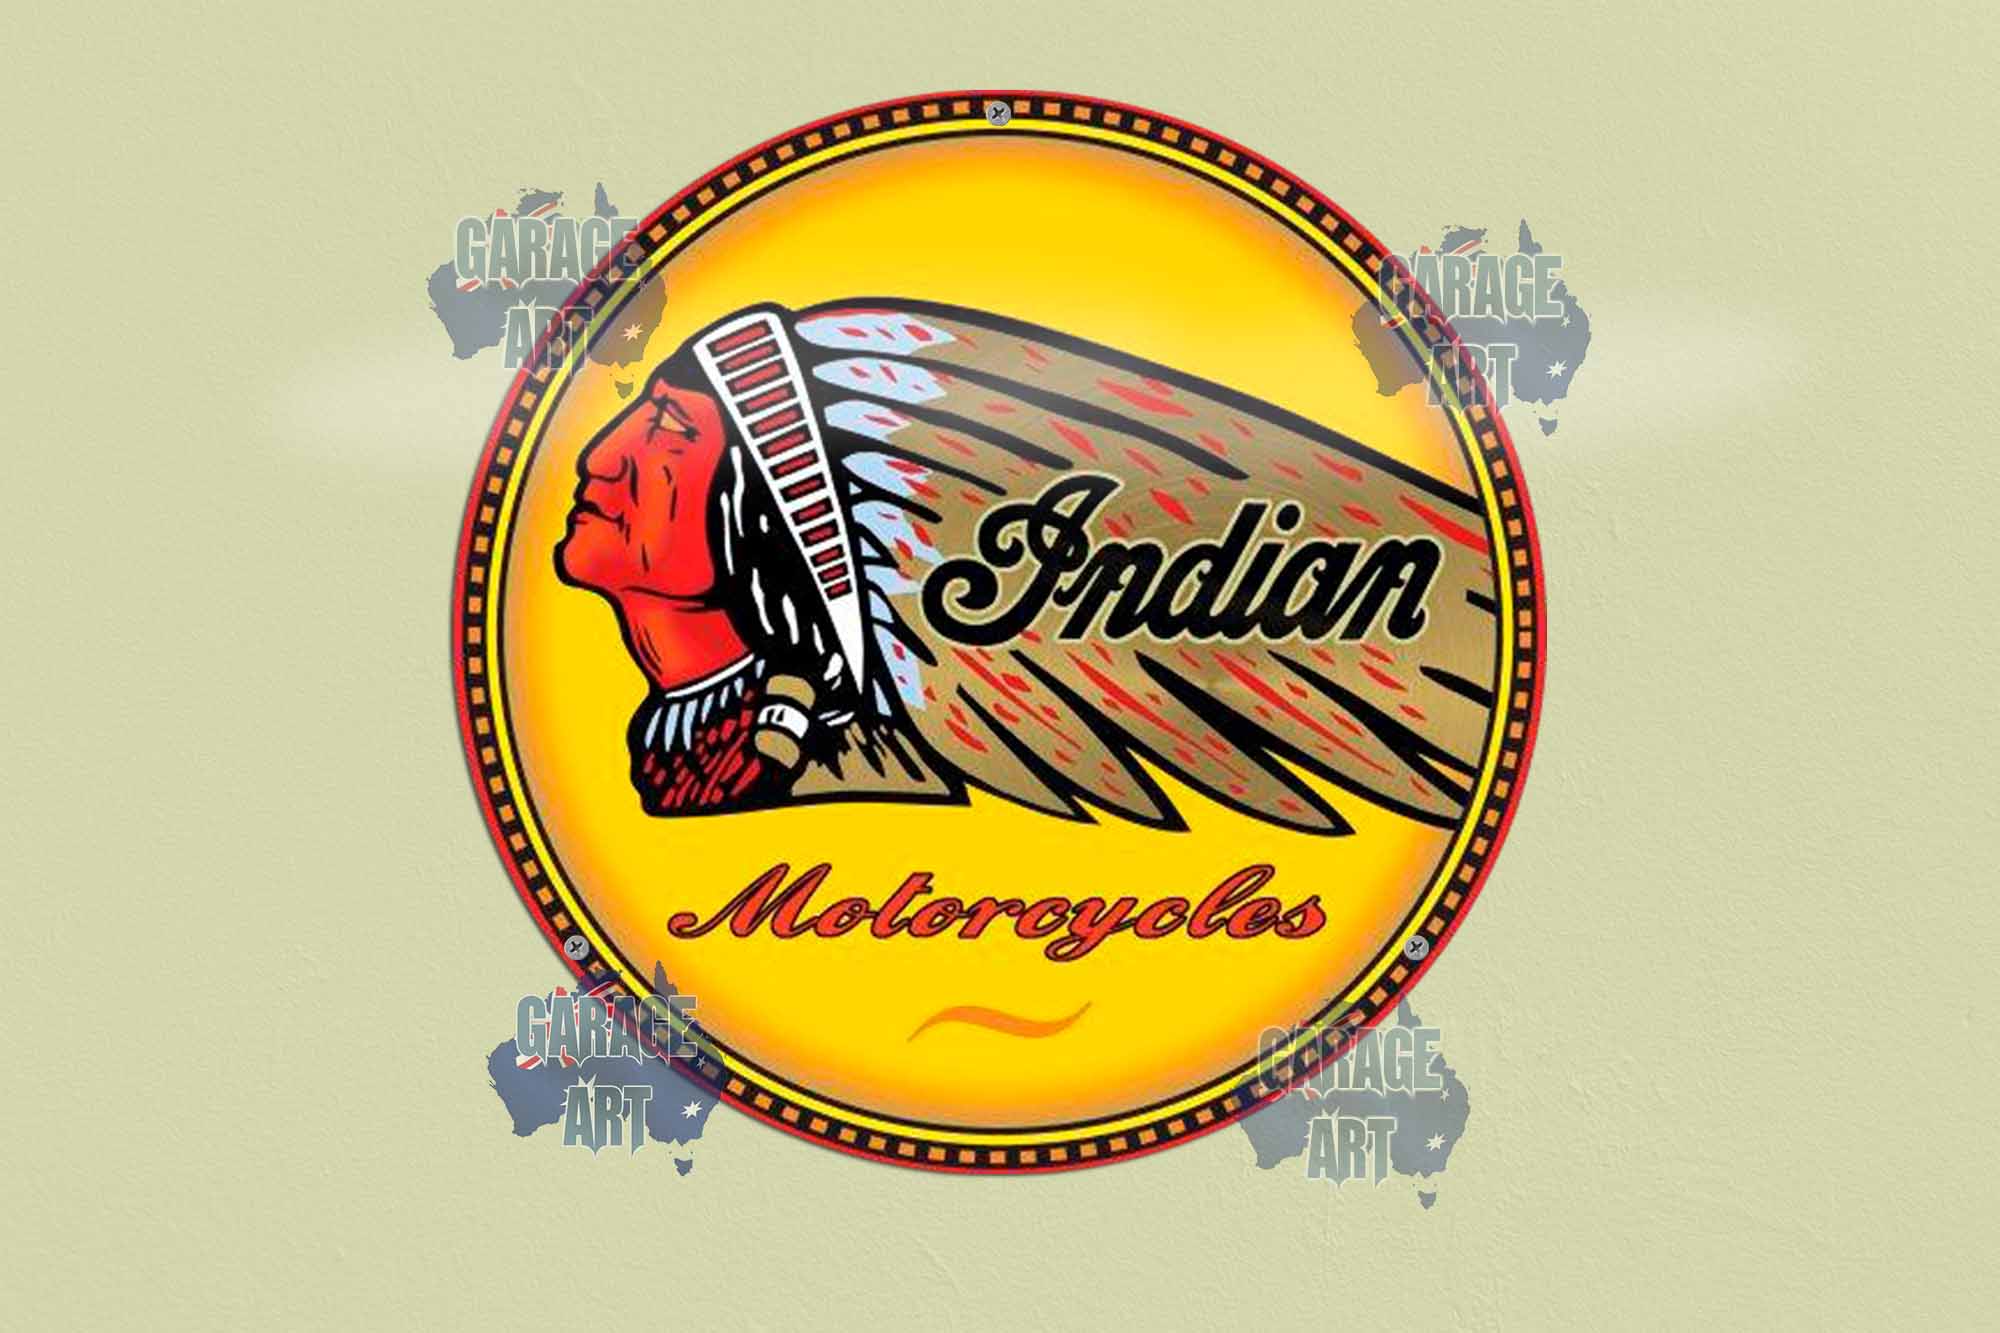 Round Indian Head Motorcycles 355mmDia Tin Sign freeshipping - garageartaustralia